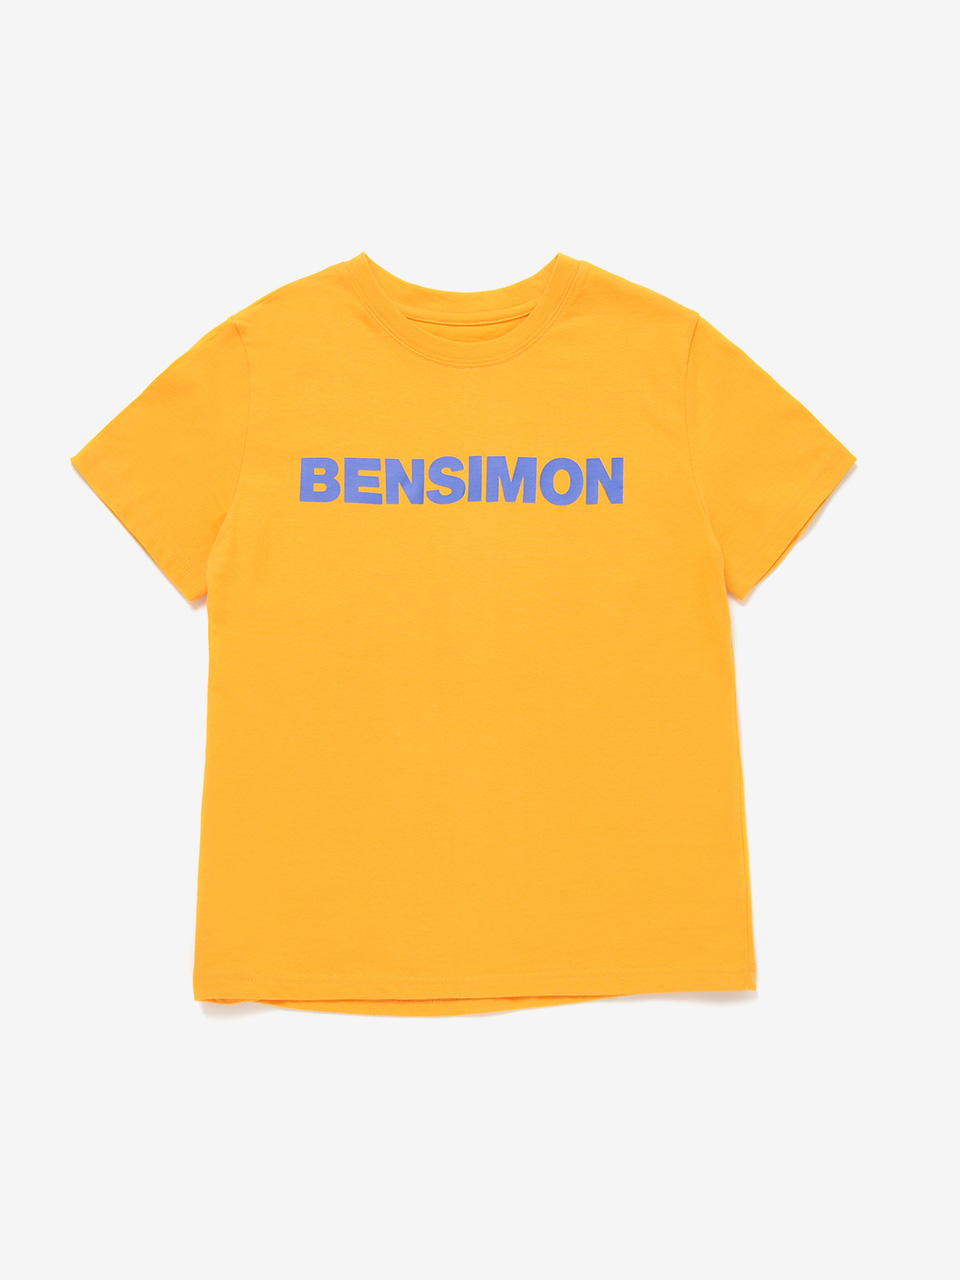 BENSIMON WOMAN T SHIRTS - YELLOW